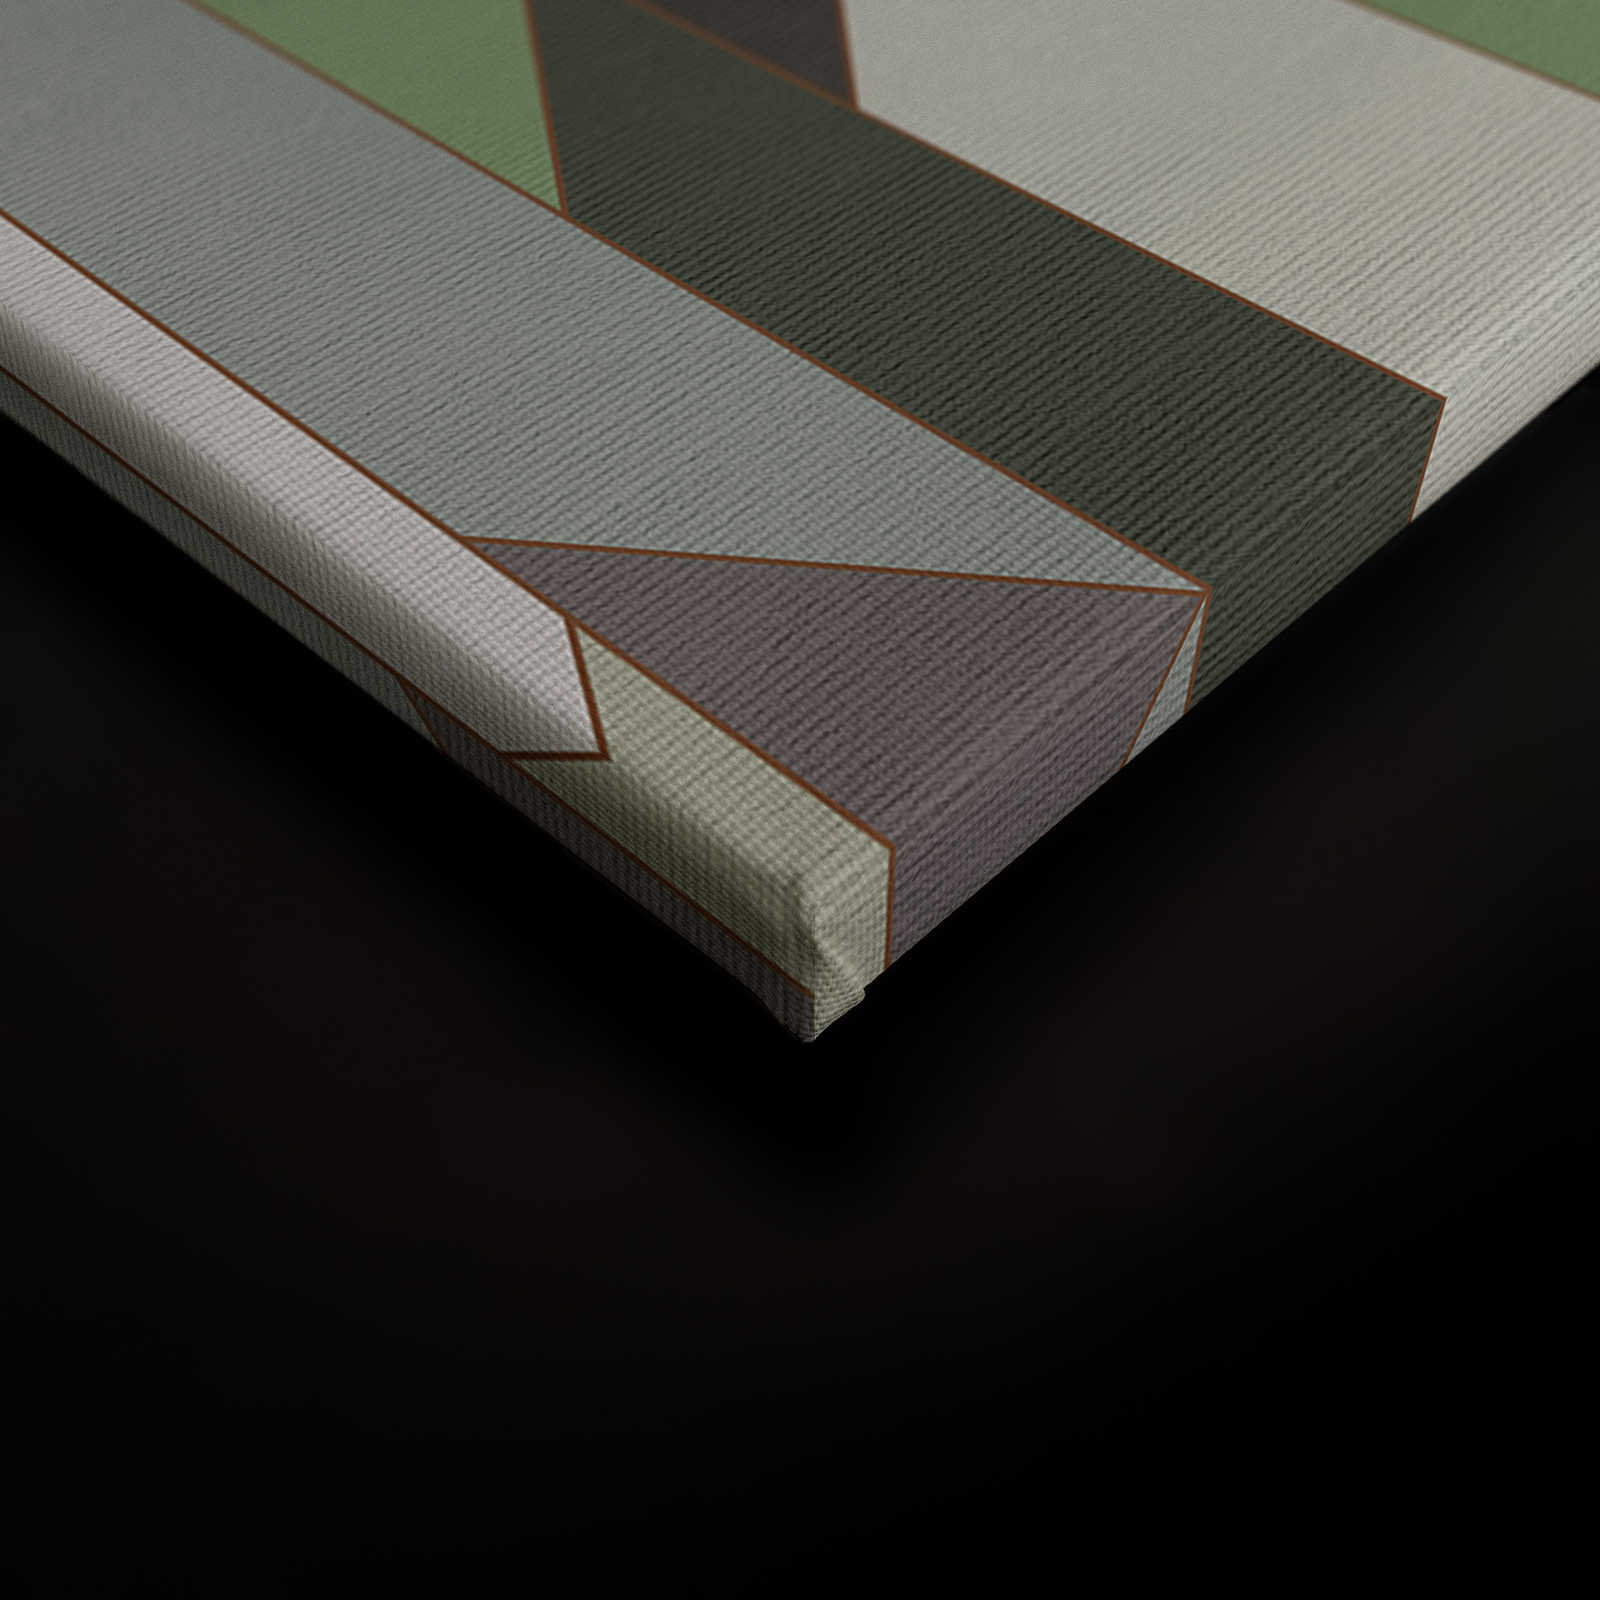             Fold 1 - Leinwandbild mit Streifendesign im Retro Stil – 0,90 m x 0,60 m
        